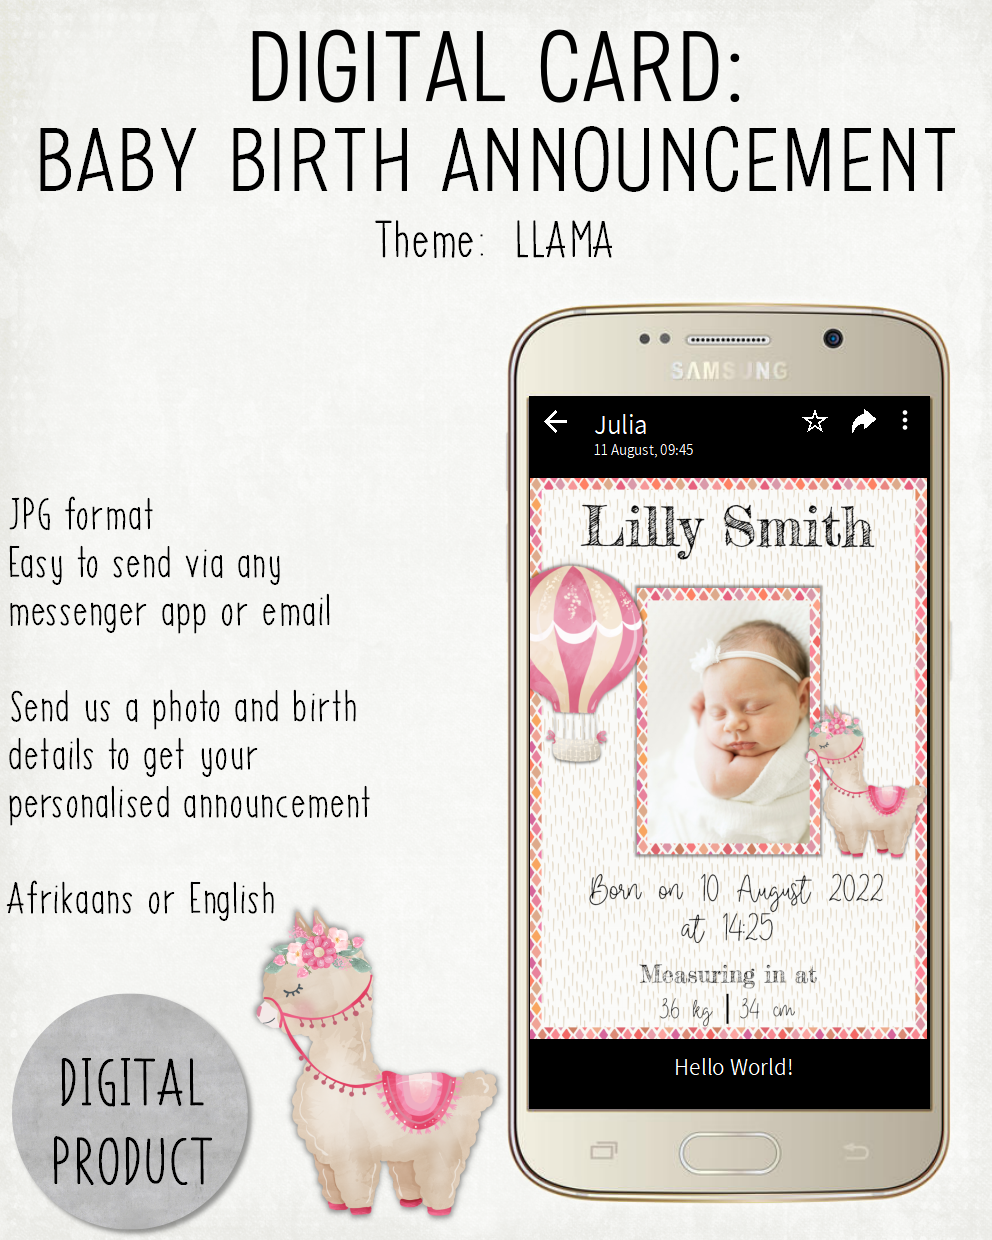 DIGITAL CARD: Baby Birth Announcement - Llama (English or Afrikaans)